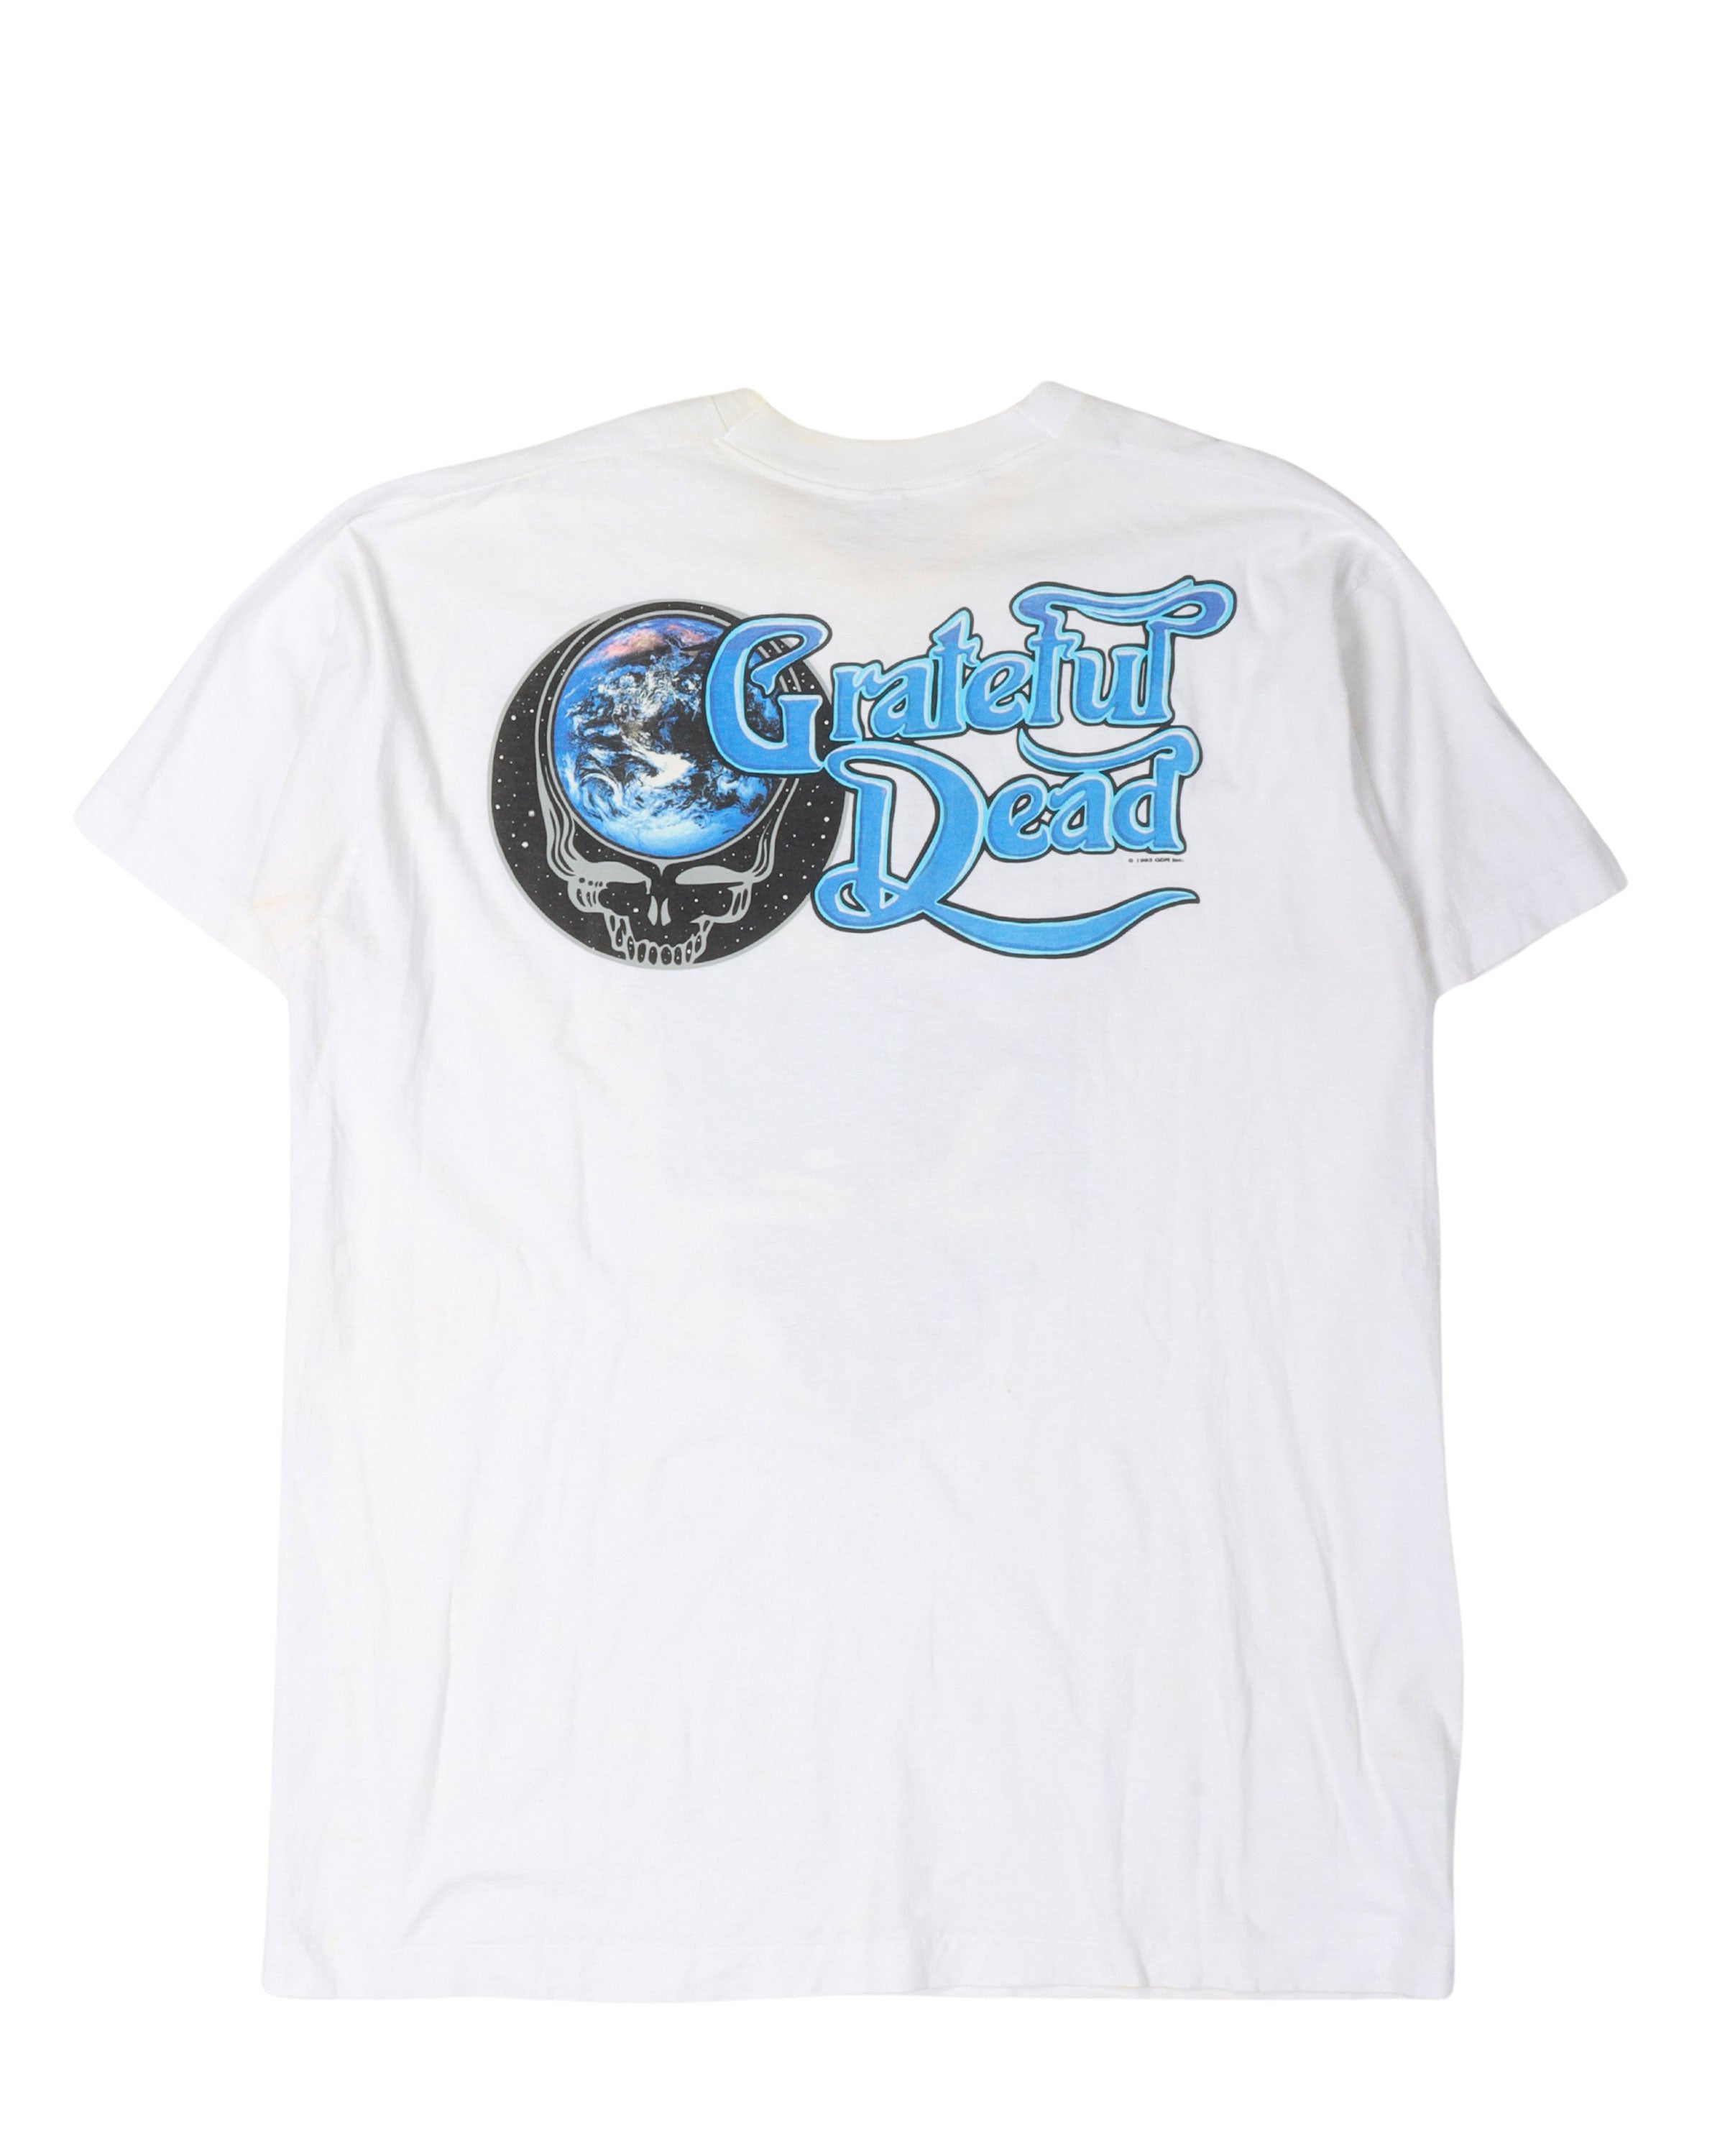 Grateful Dead Orca T-Shirt